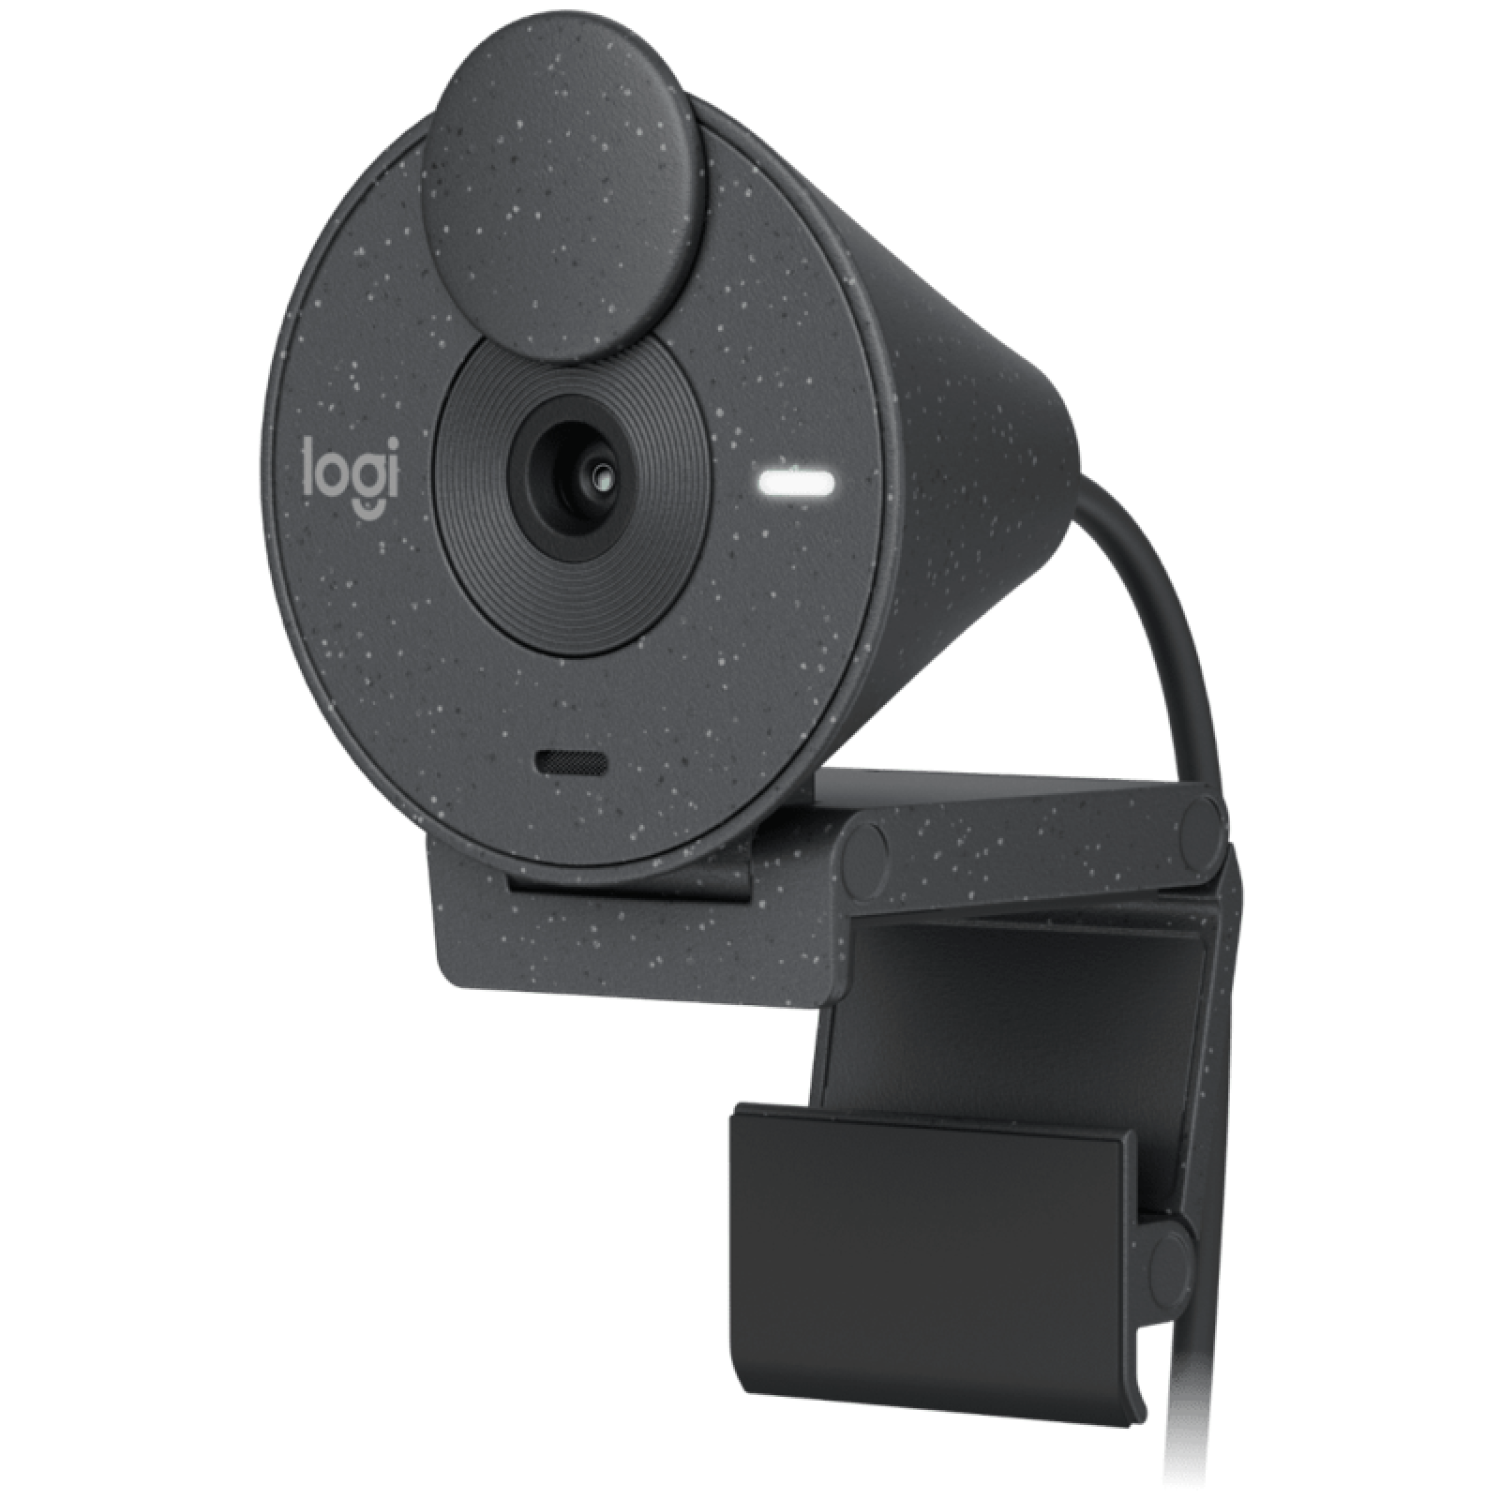 Brio 305 Full HD Webcam